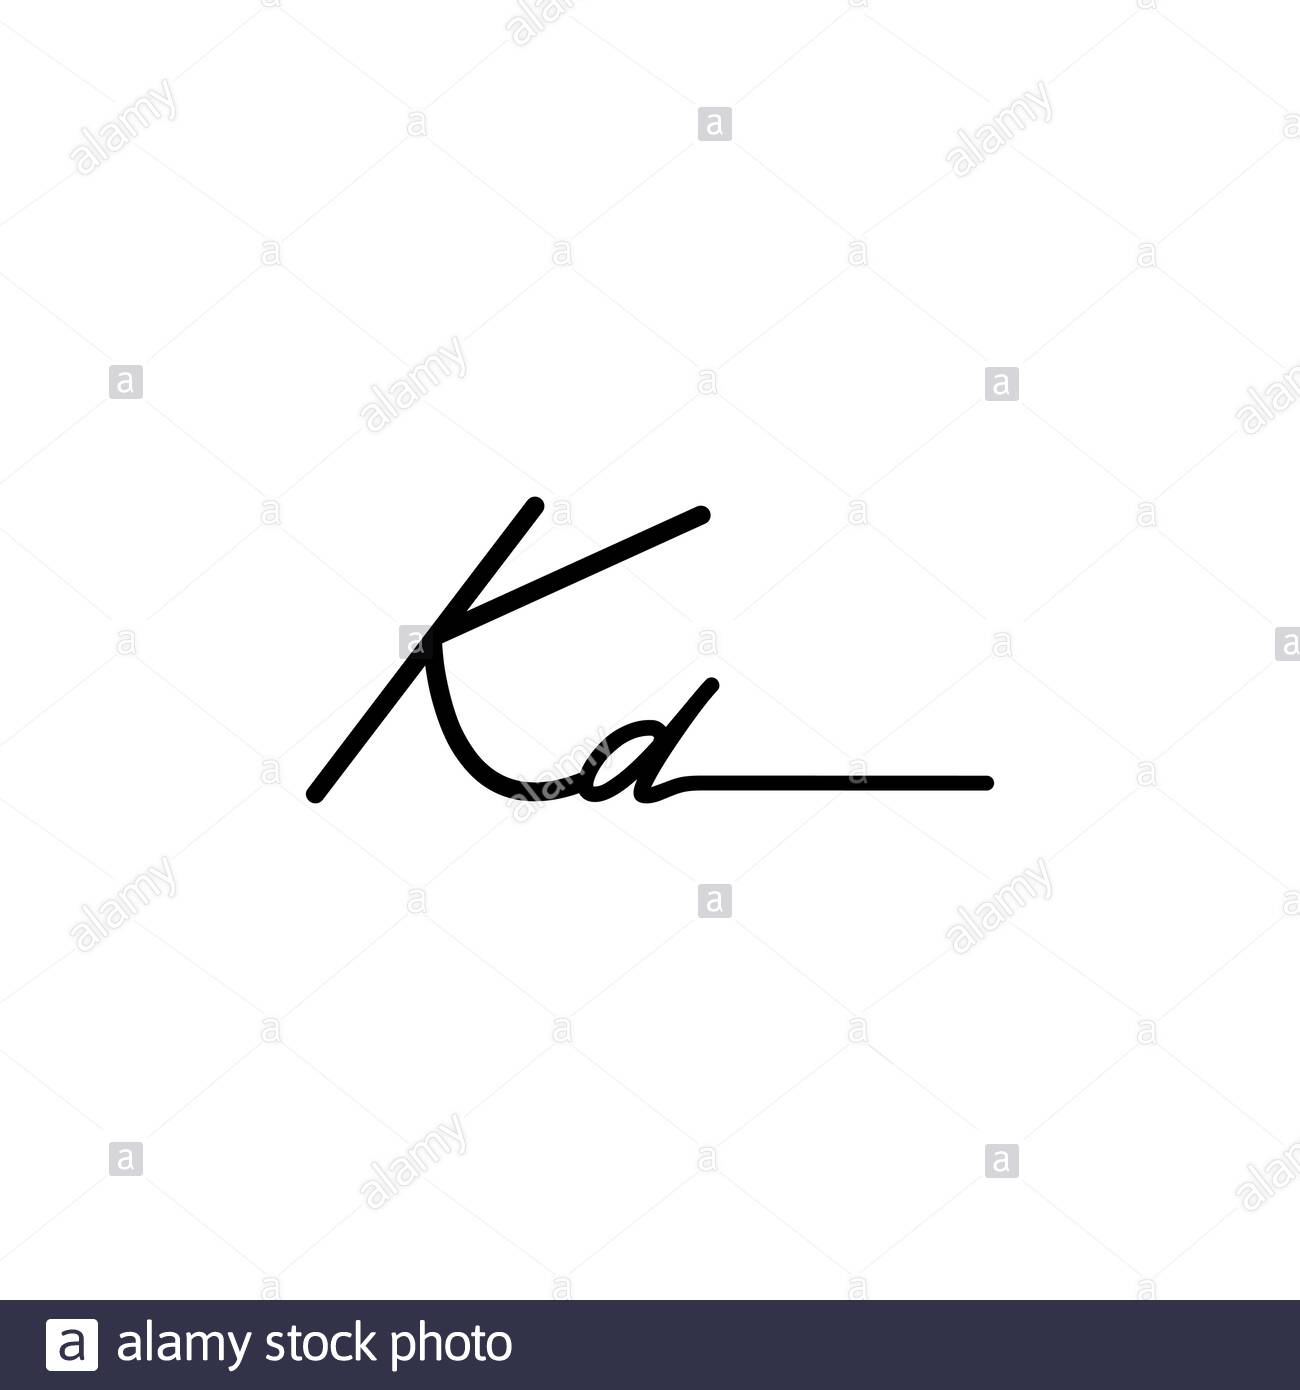 kd signature